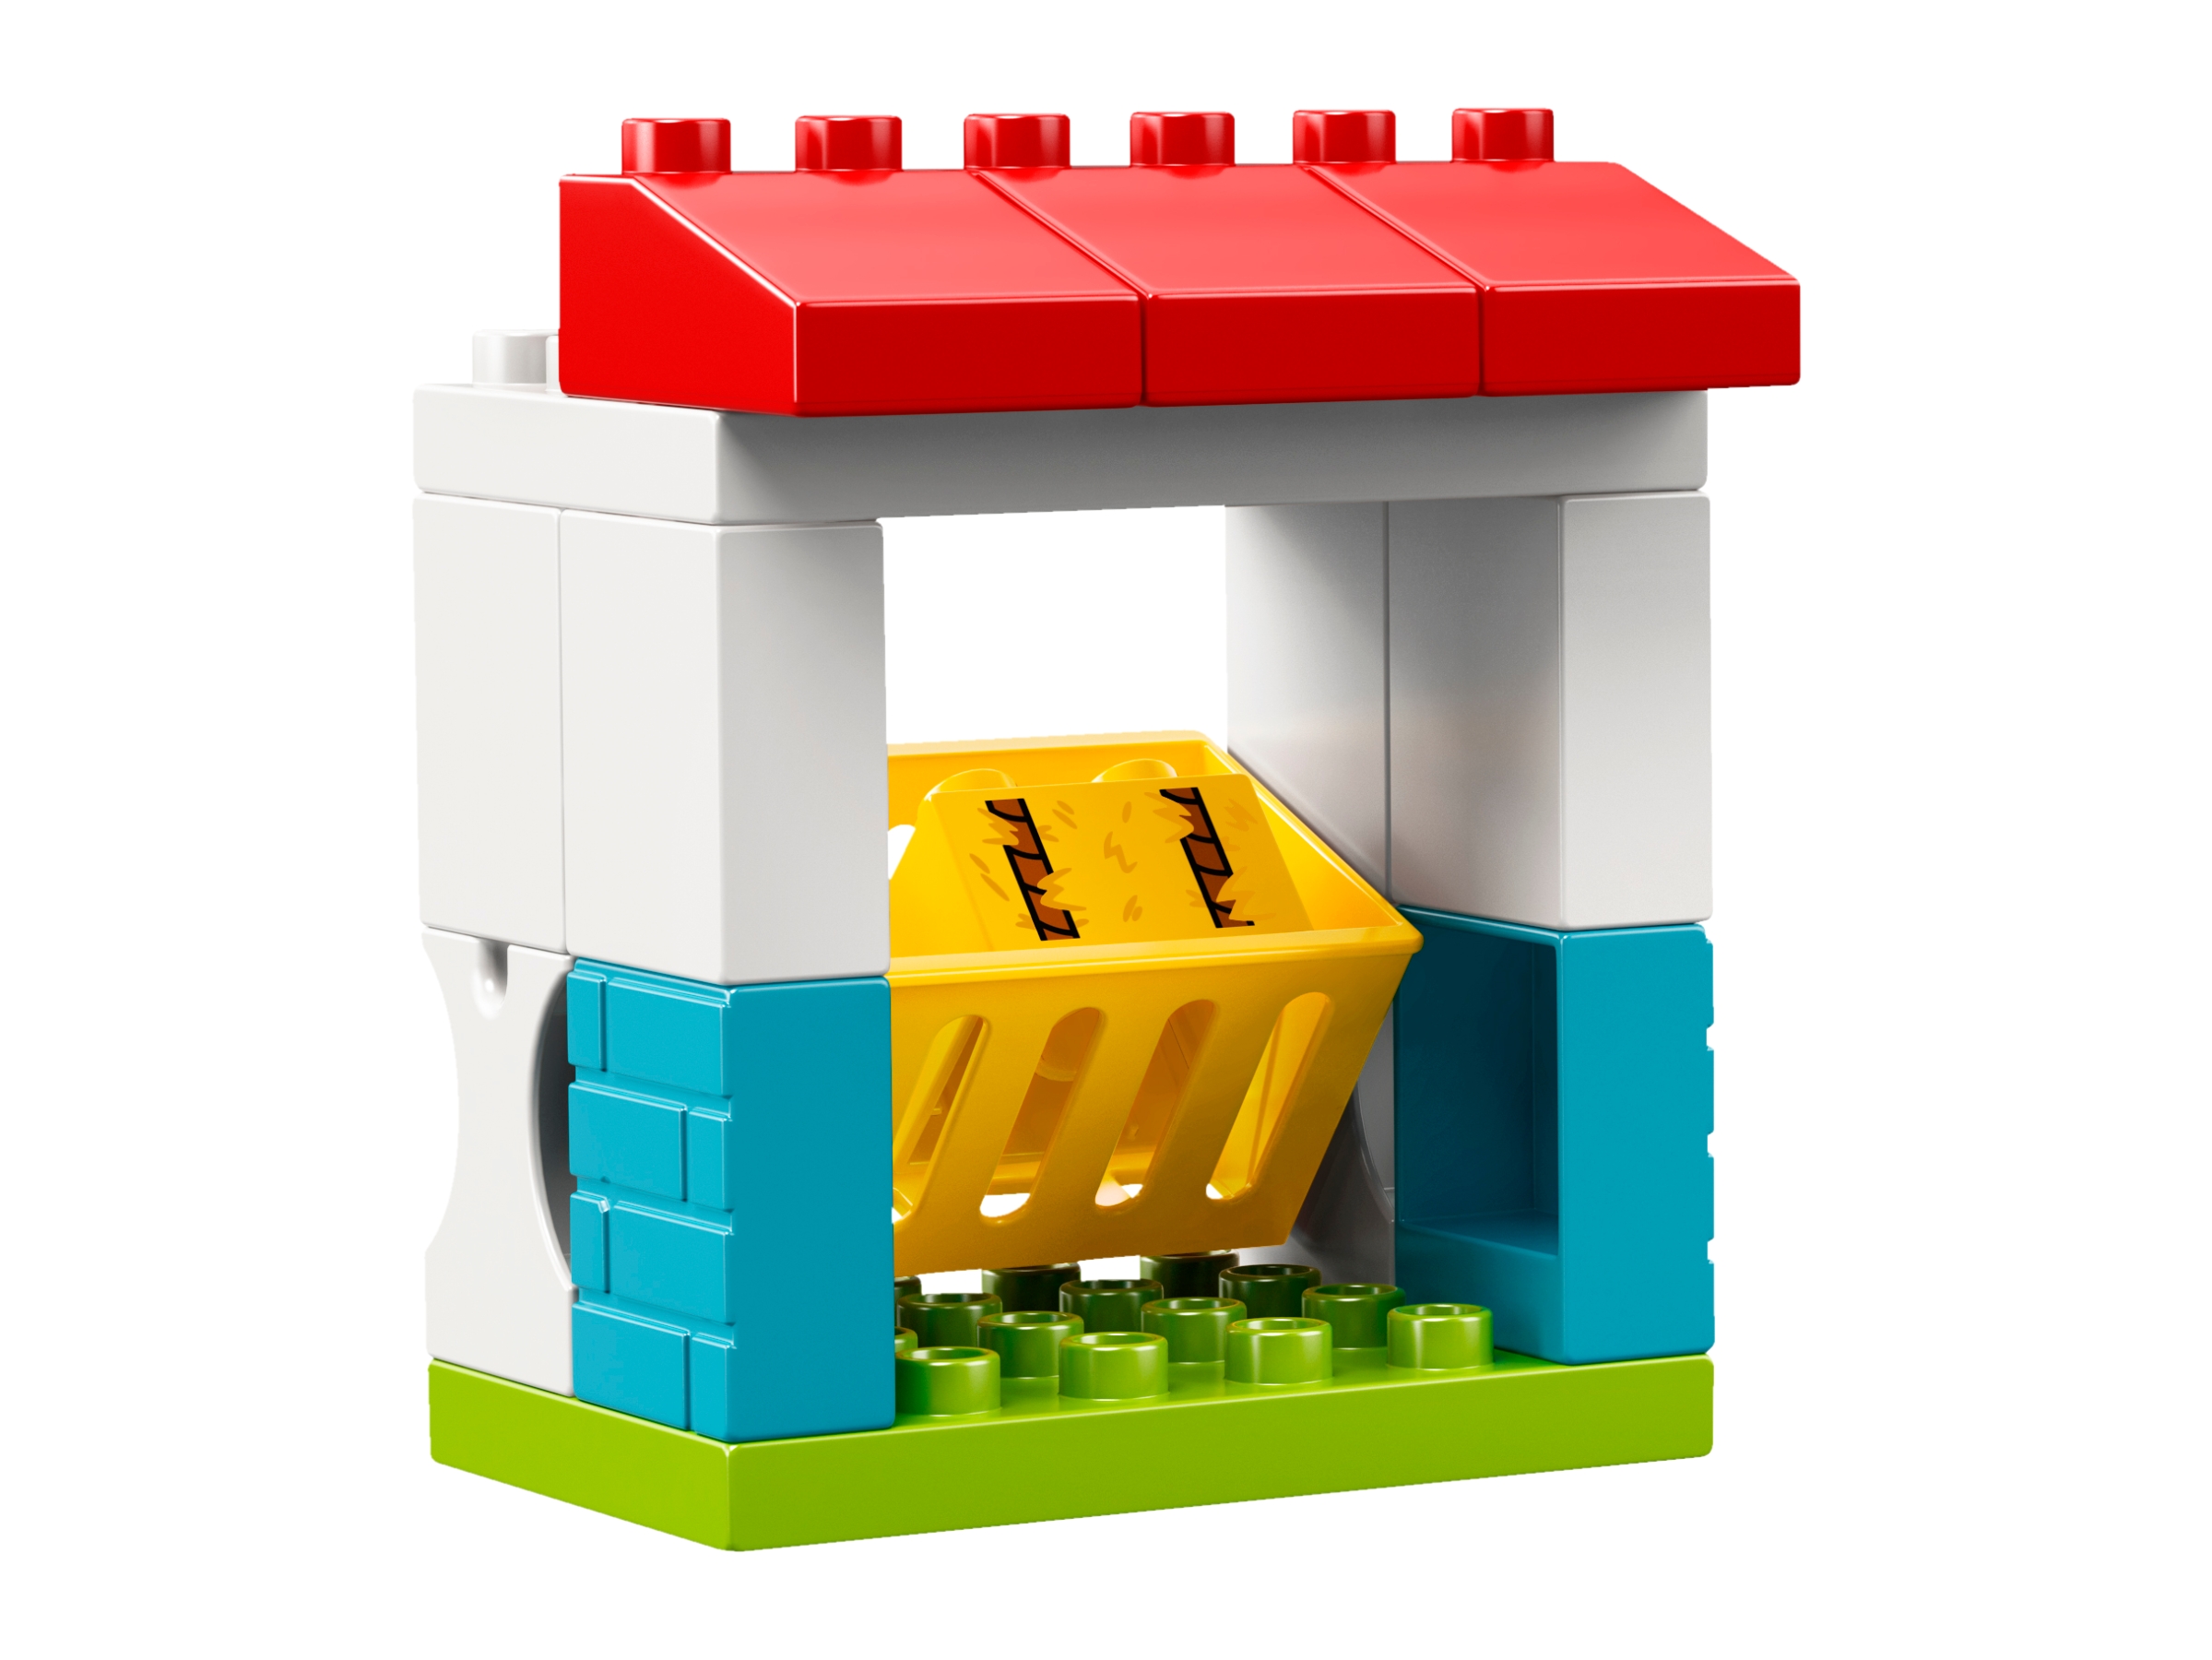 LEGO 10868 Duplo - Le Poney-Club De La Ferme 